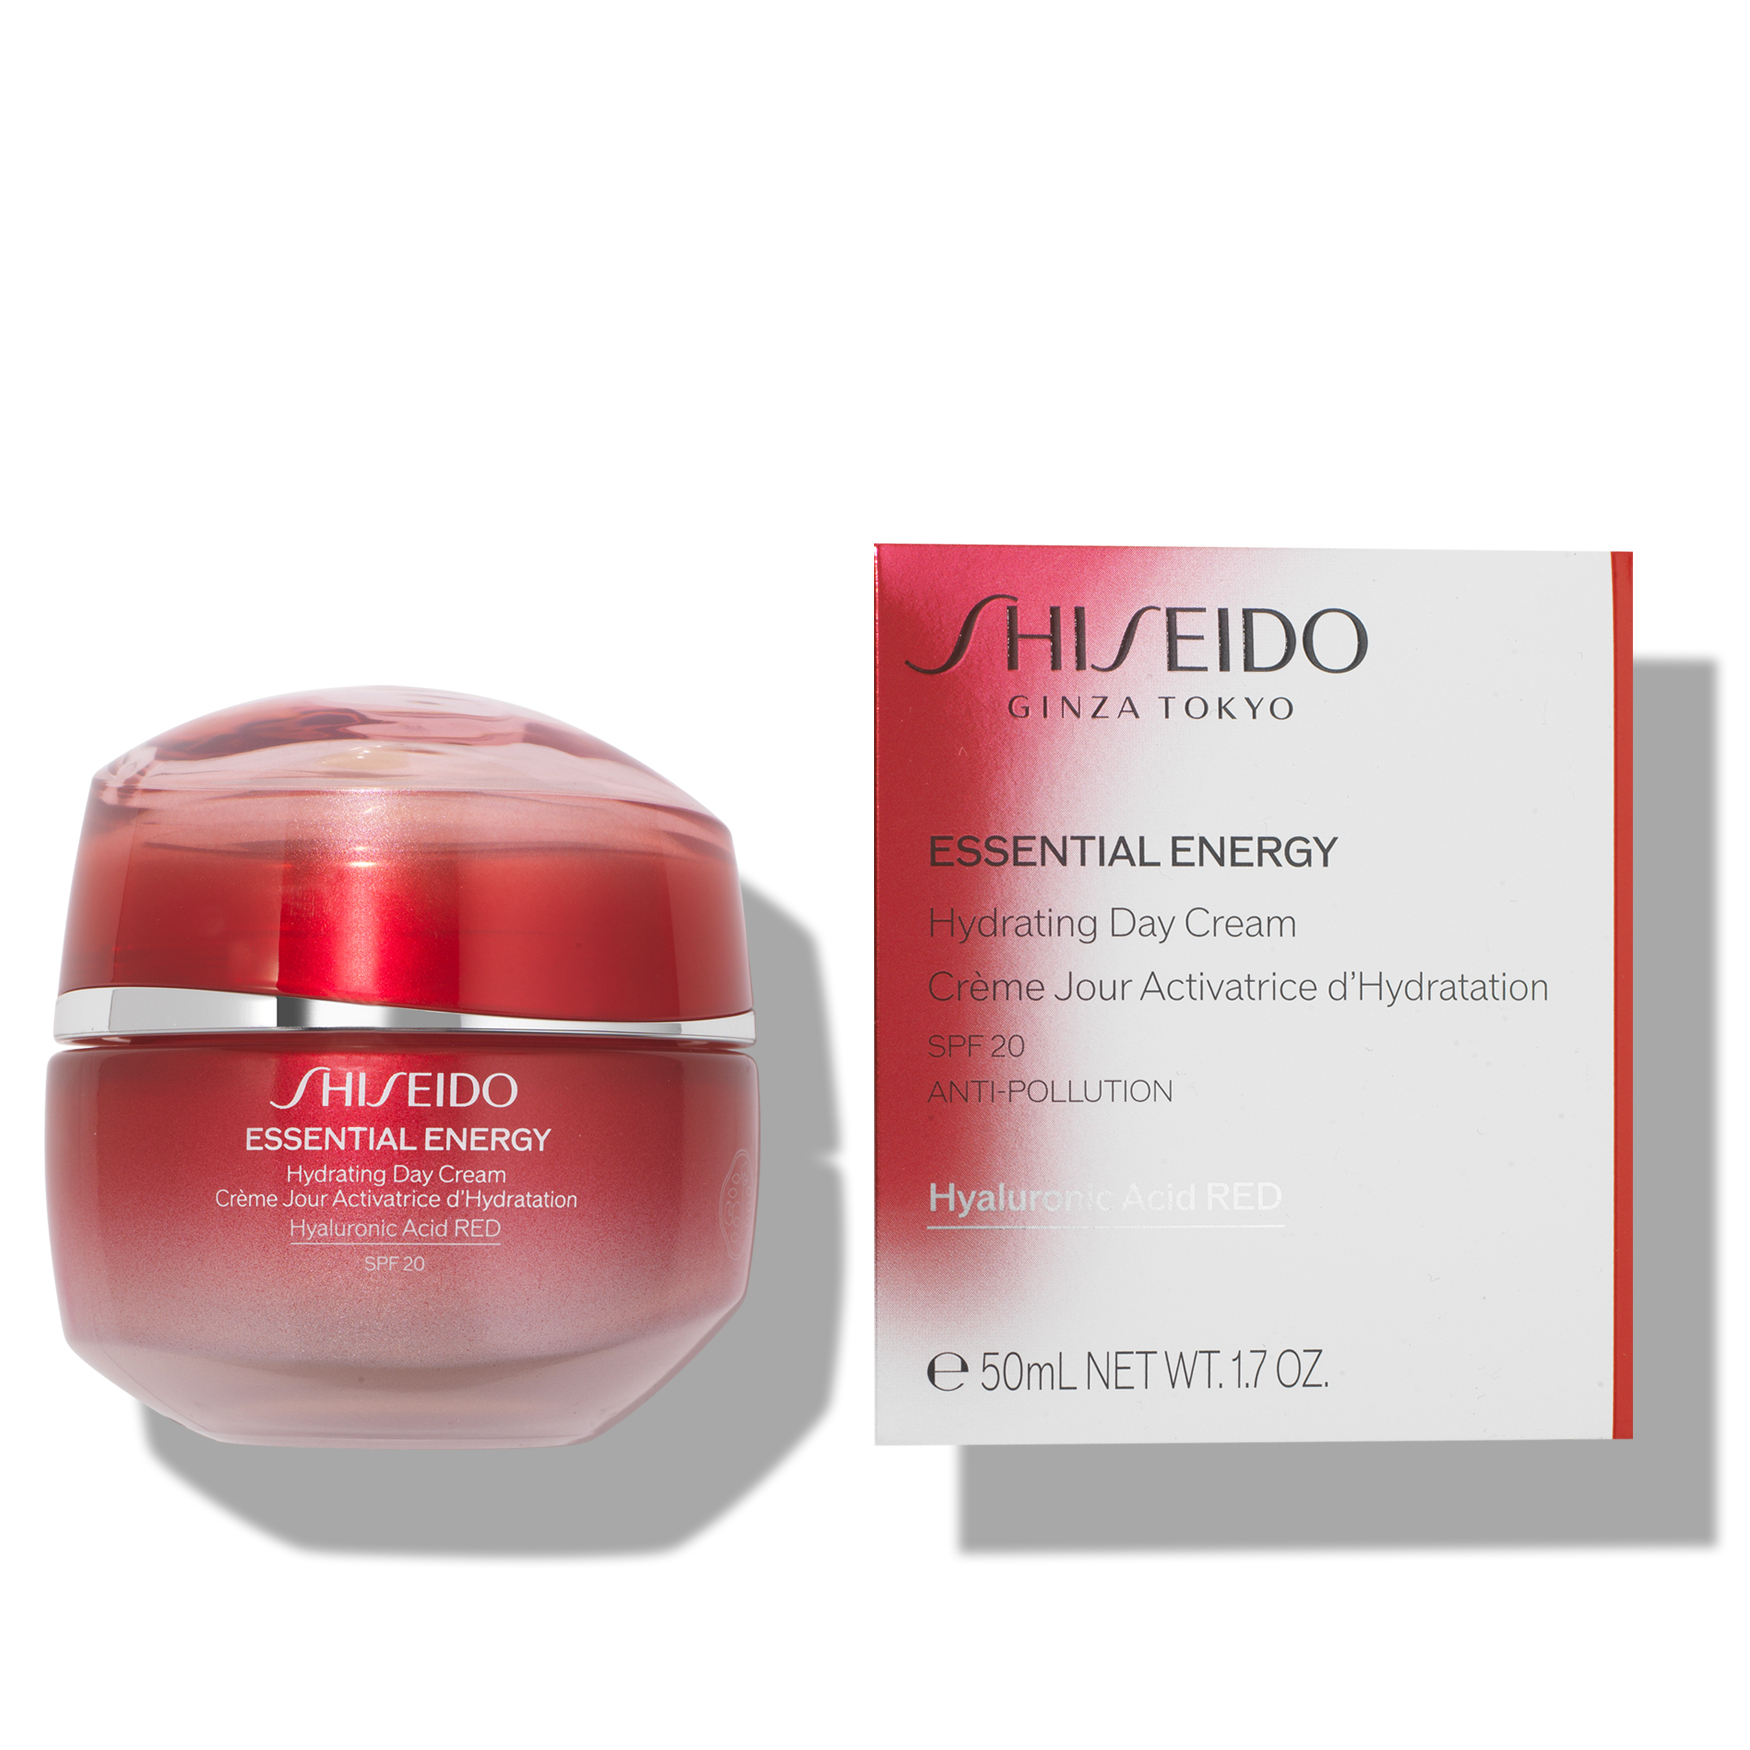 Shiseido essential energy. Шисейдо Essential Energy Hydrating Cream. Крем Shiseido суперувлаж. Shiseido Advanced Essential Energy логотип.